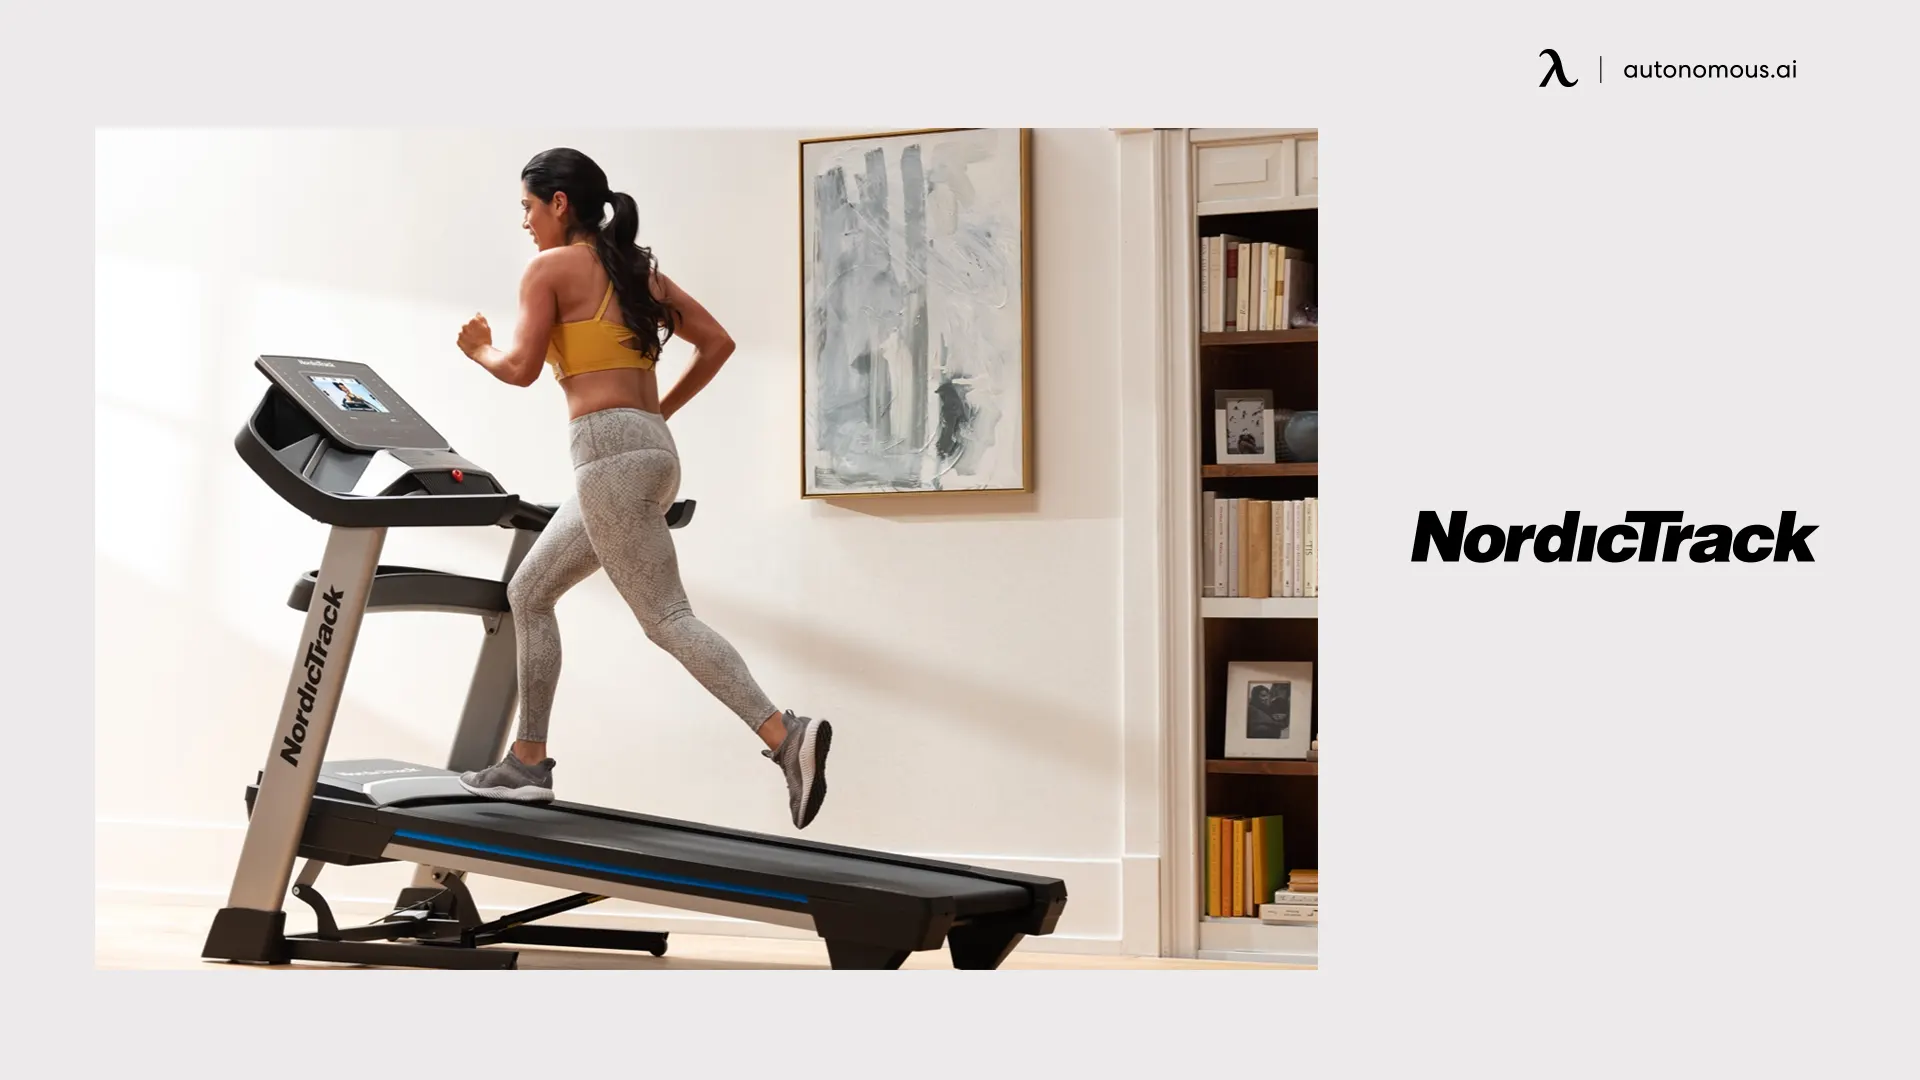 NordicTrack treadmill brands